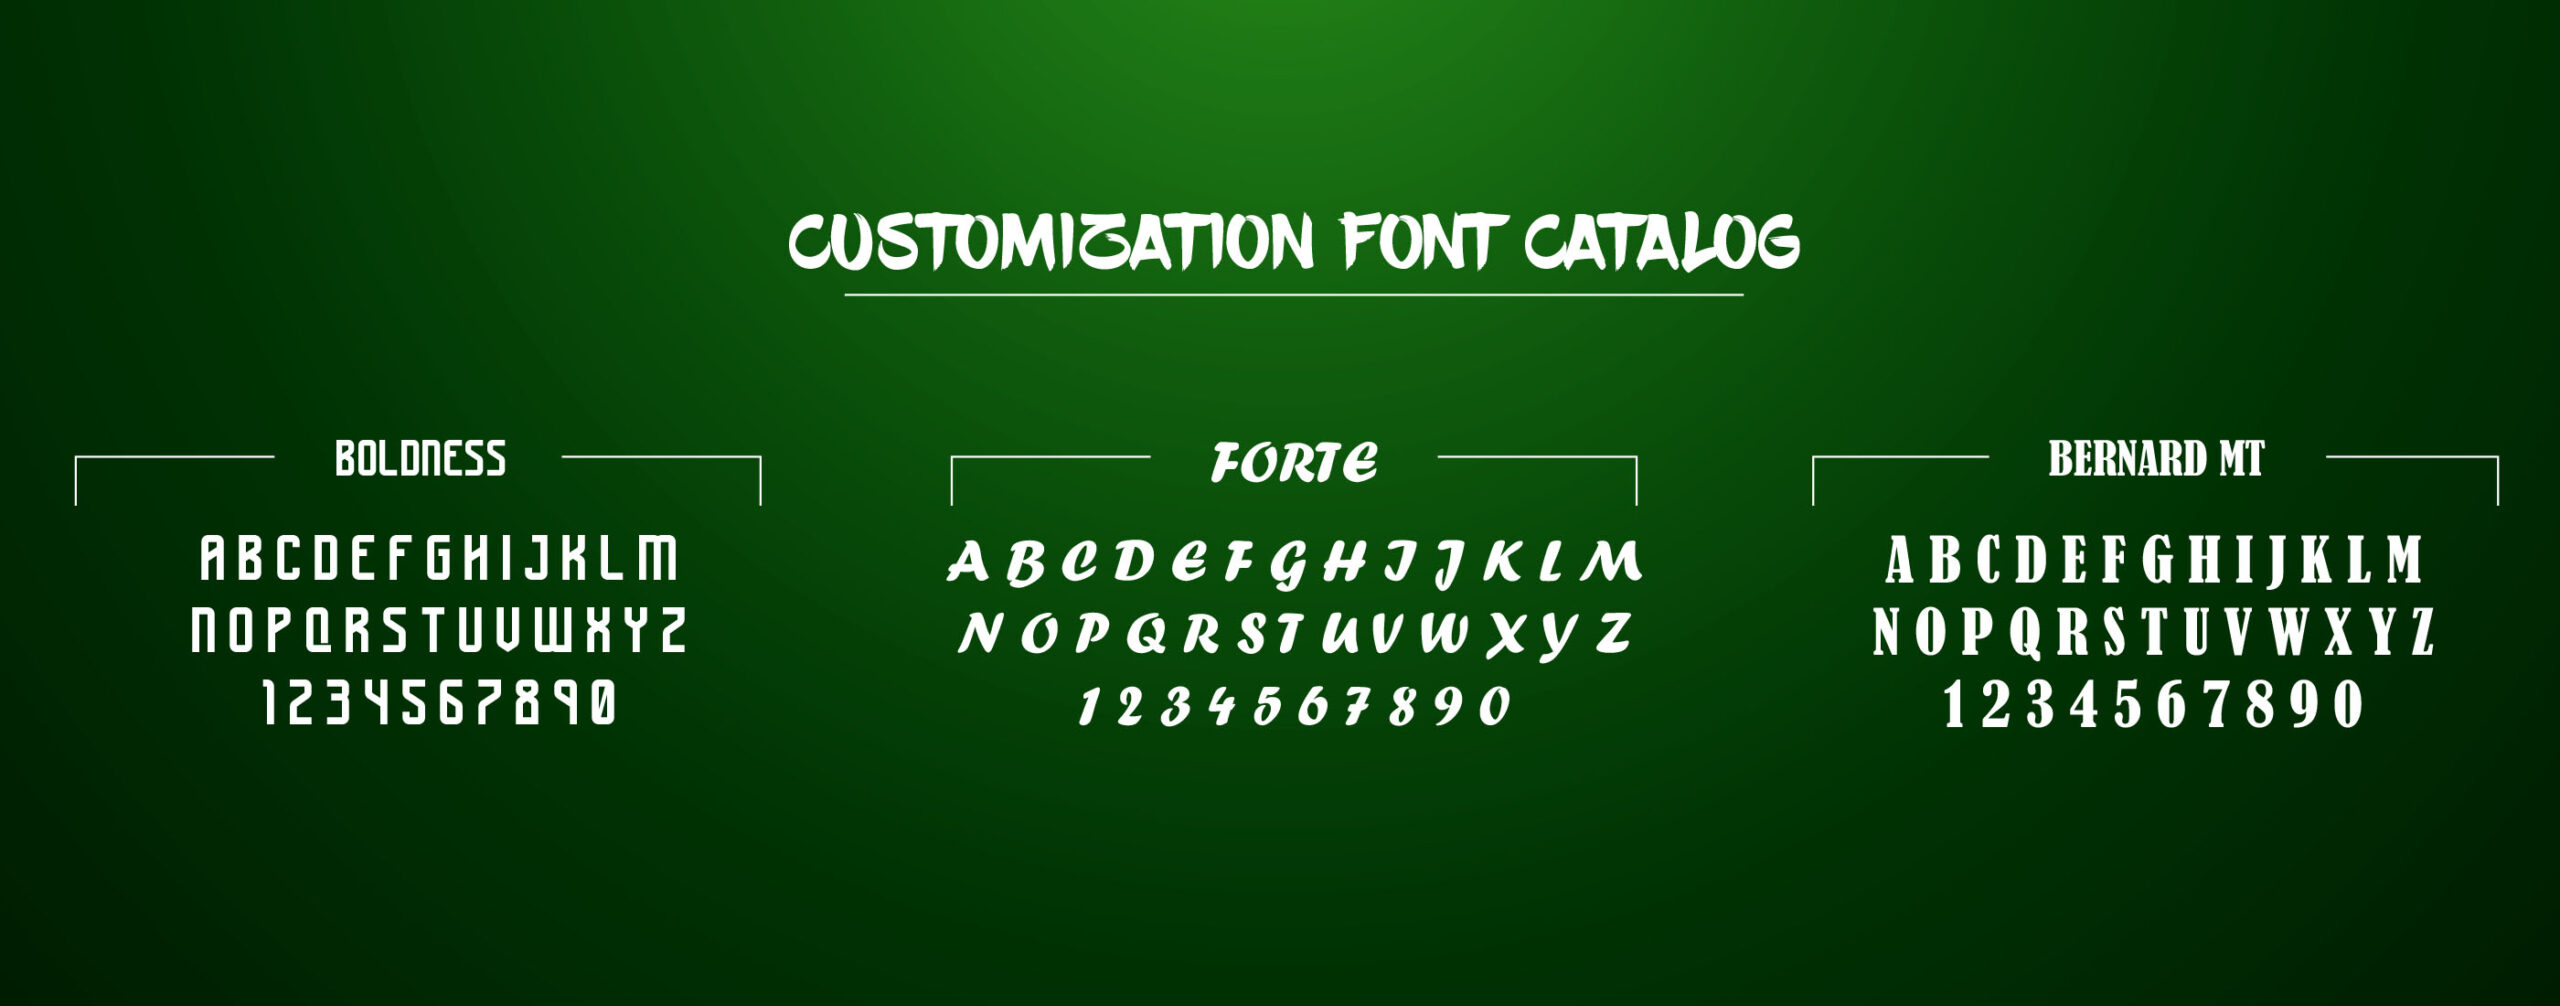 Customization font catalog